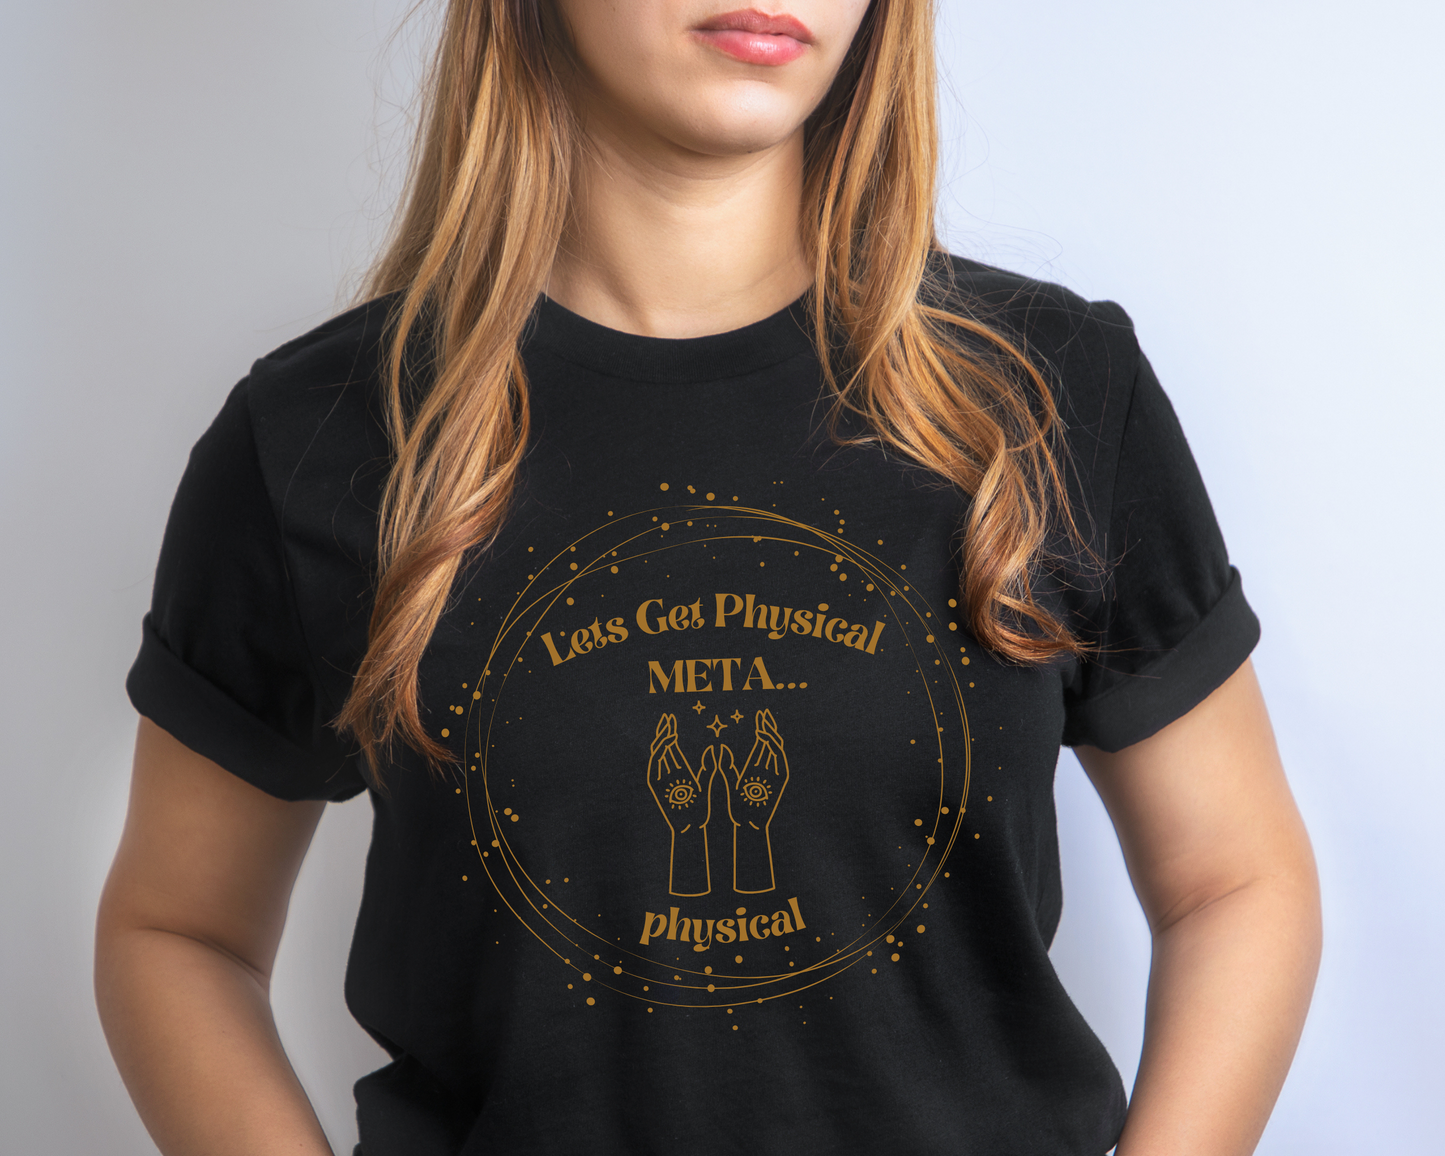 Lets Get Physical Metaphysical Funny Spiritual Shirt